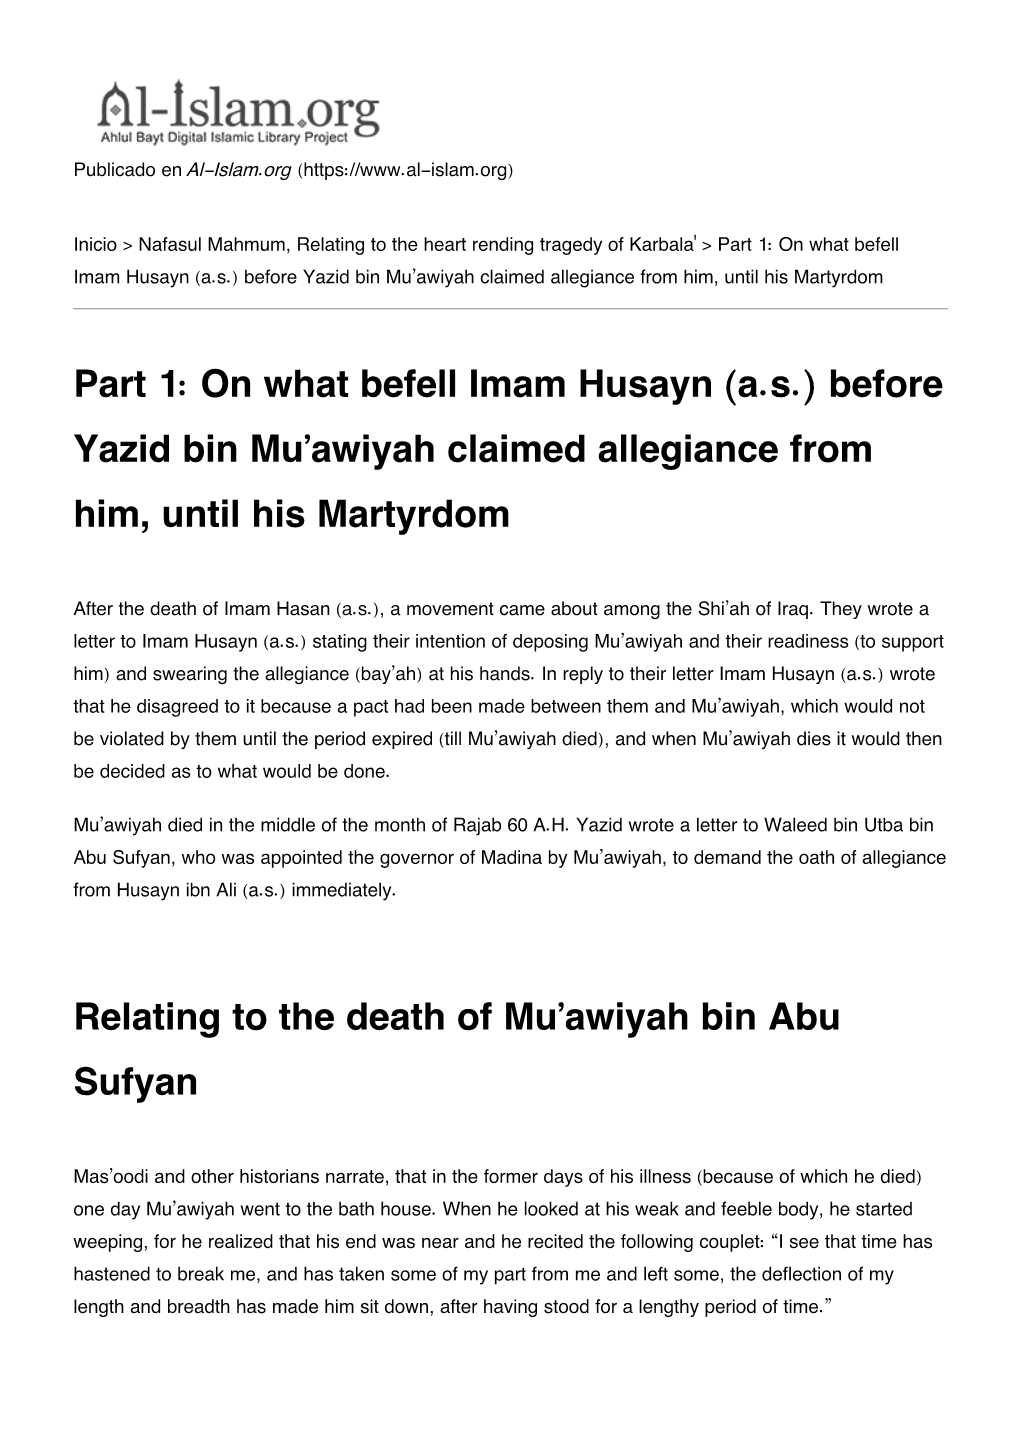 Part 1: on What Befell Imam Husayn (A.S.) Before Yazid Bin Mu'awiyah